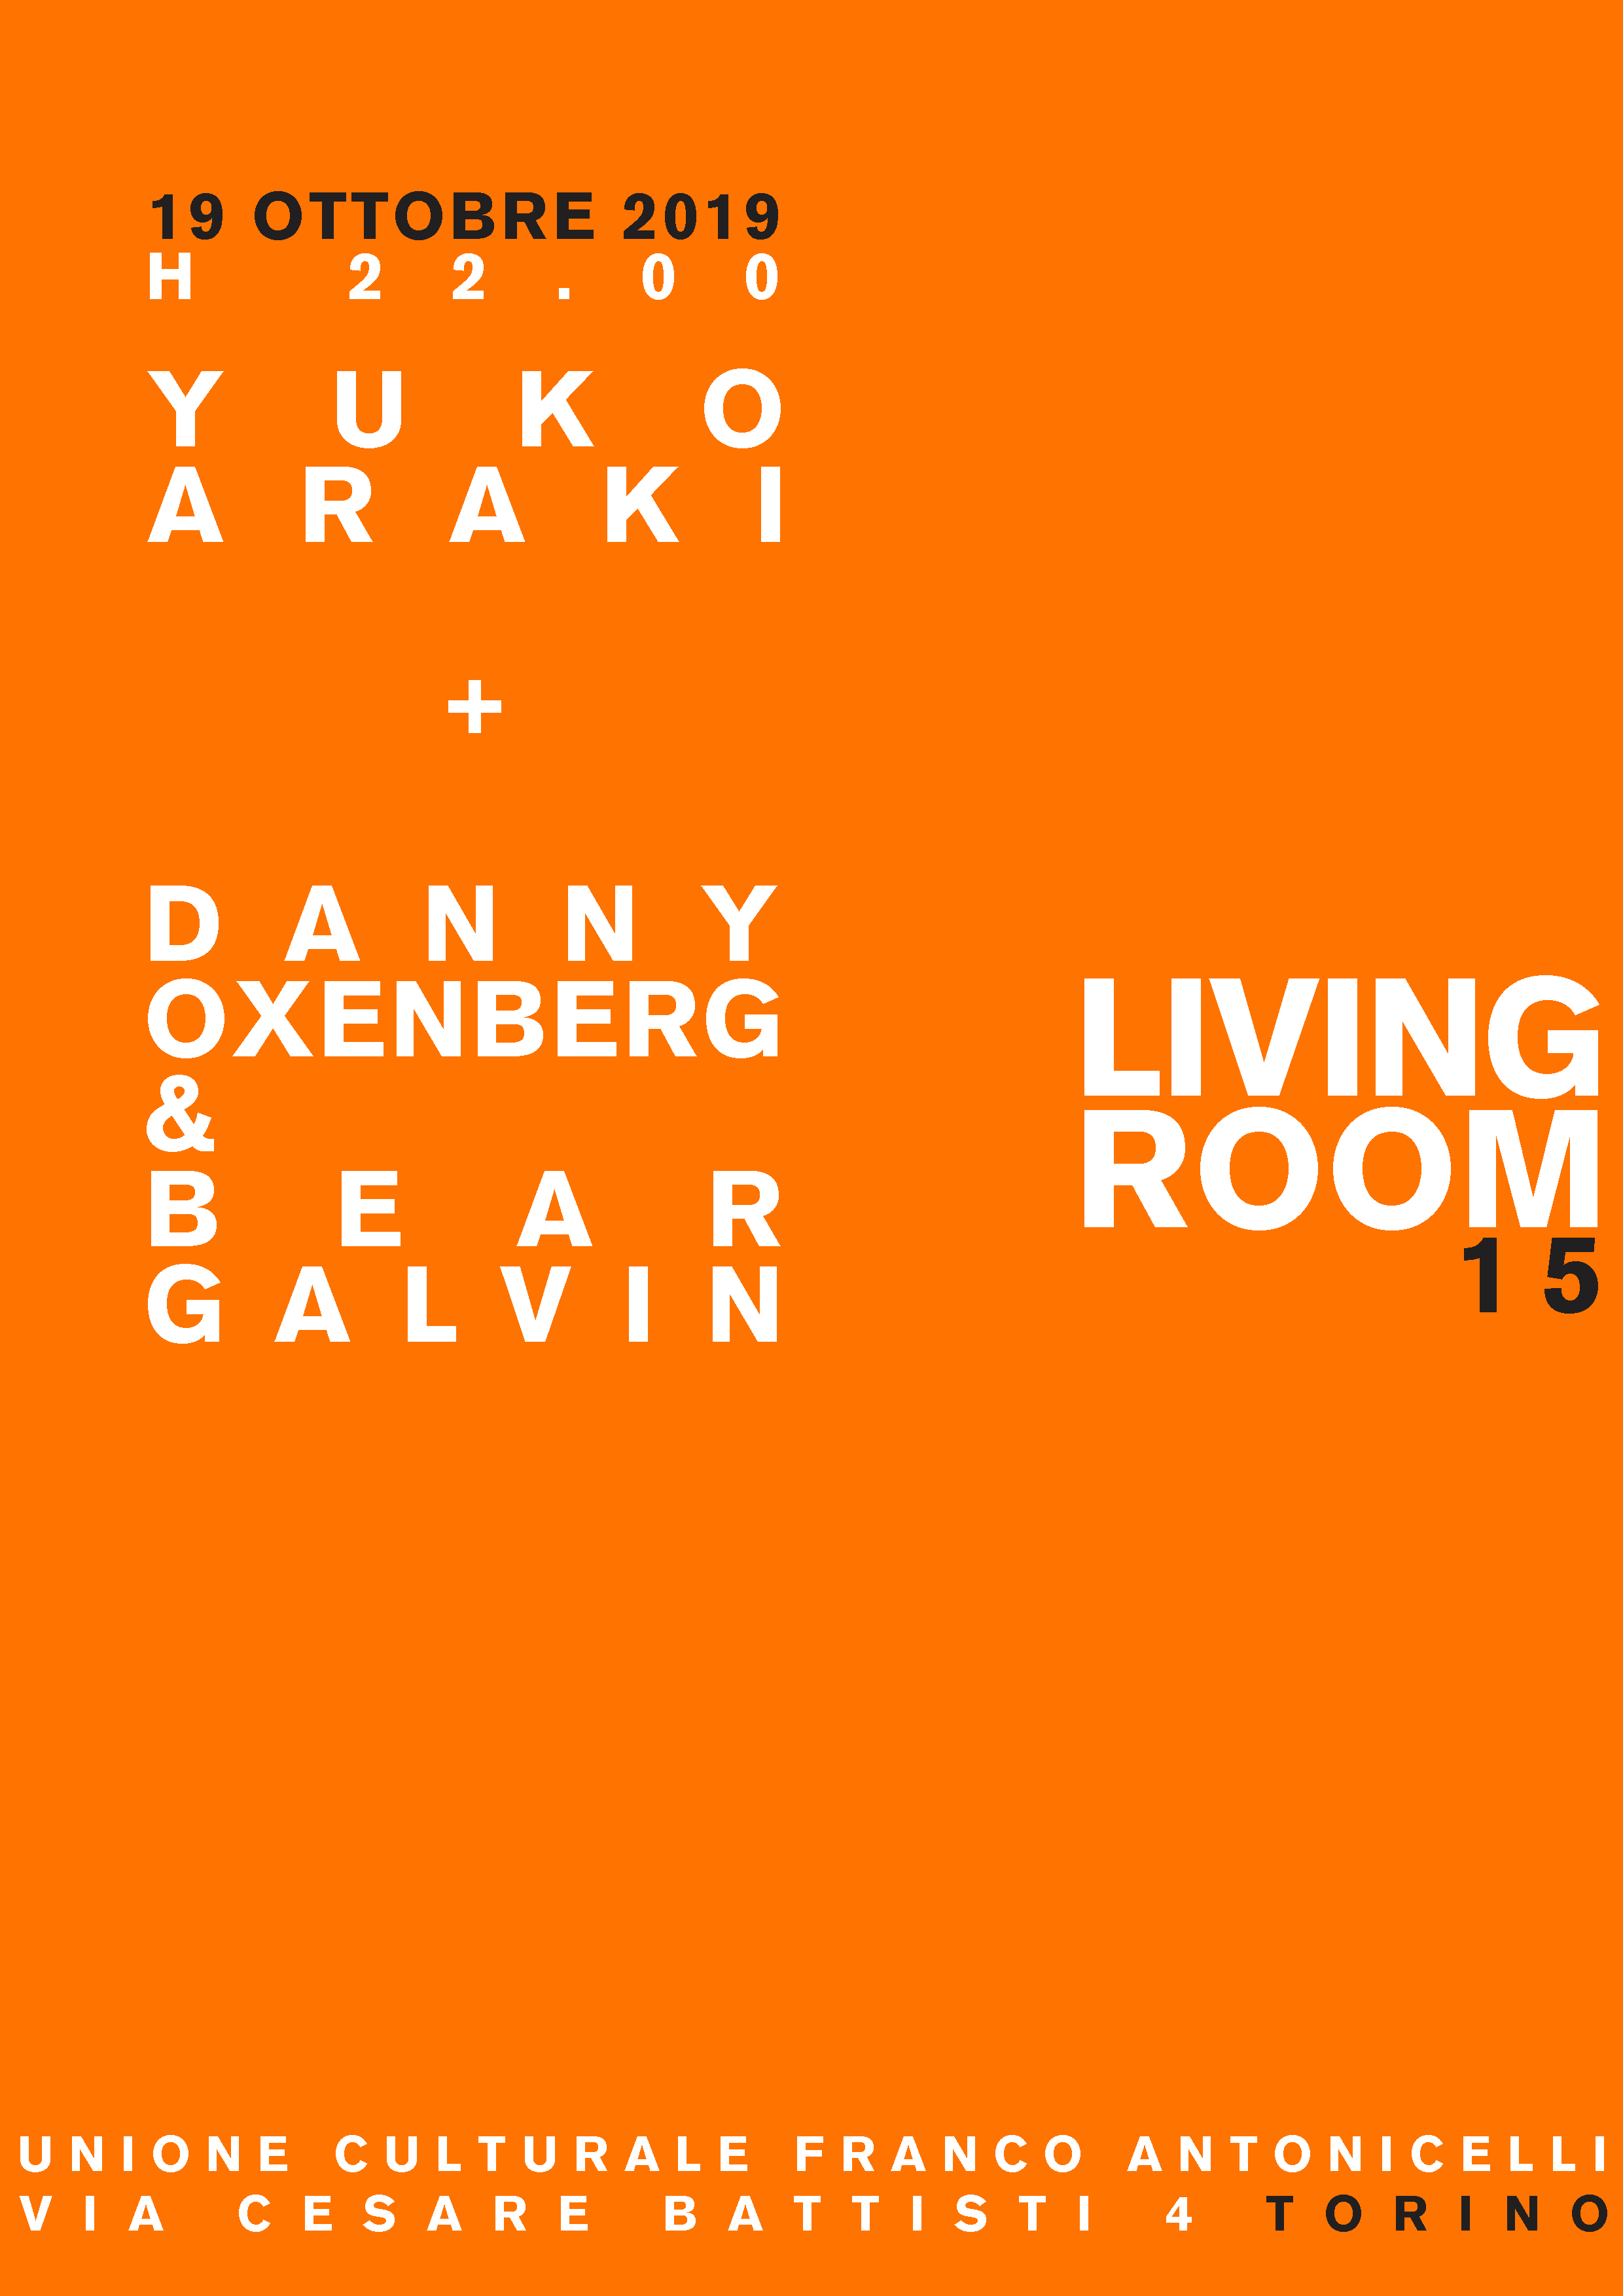 Living Room 15